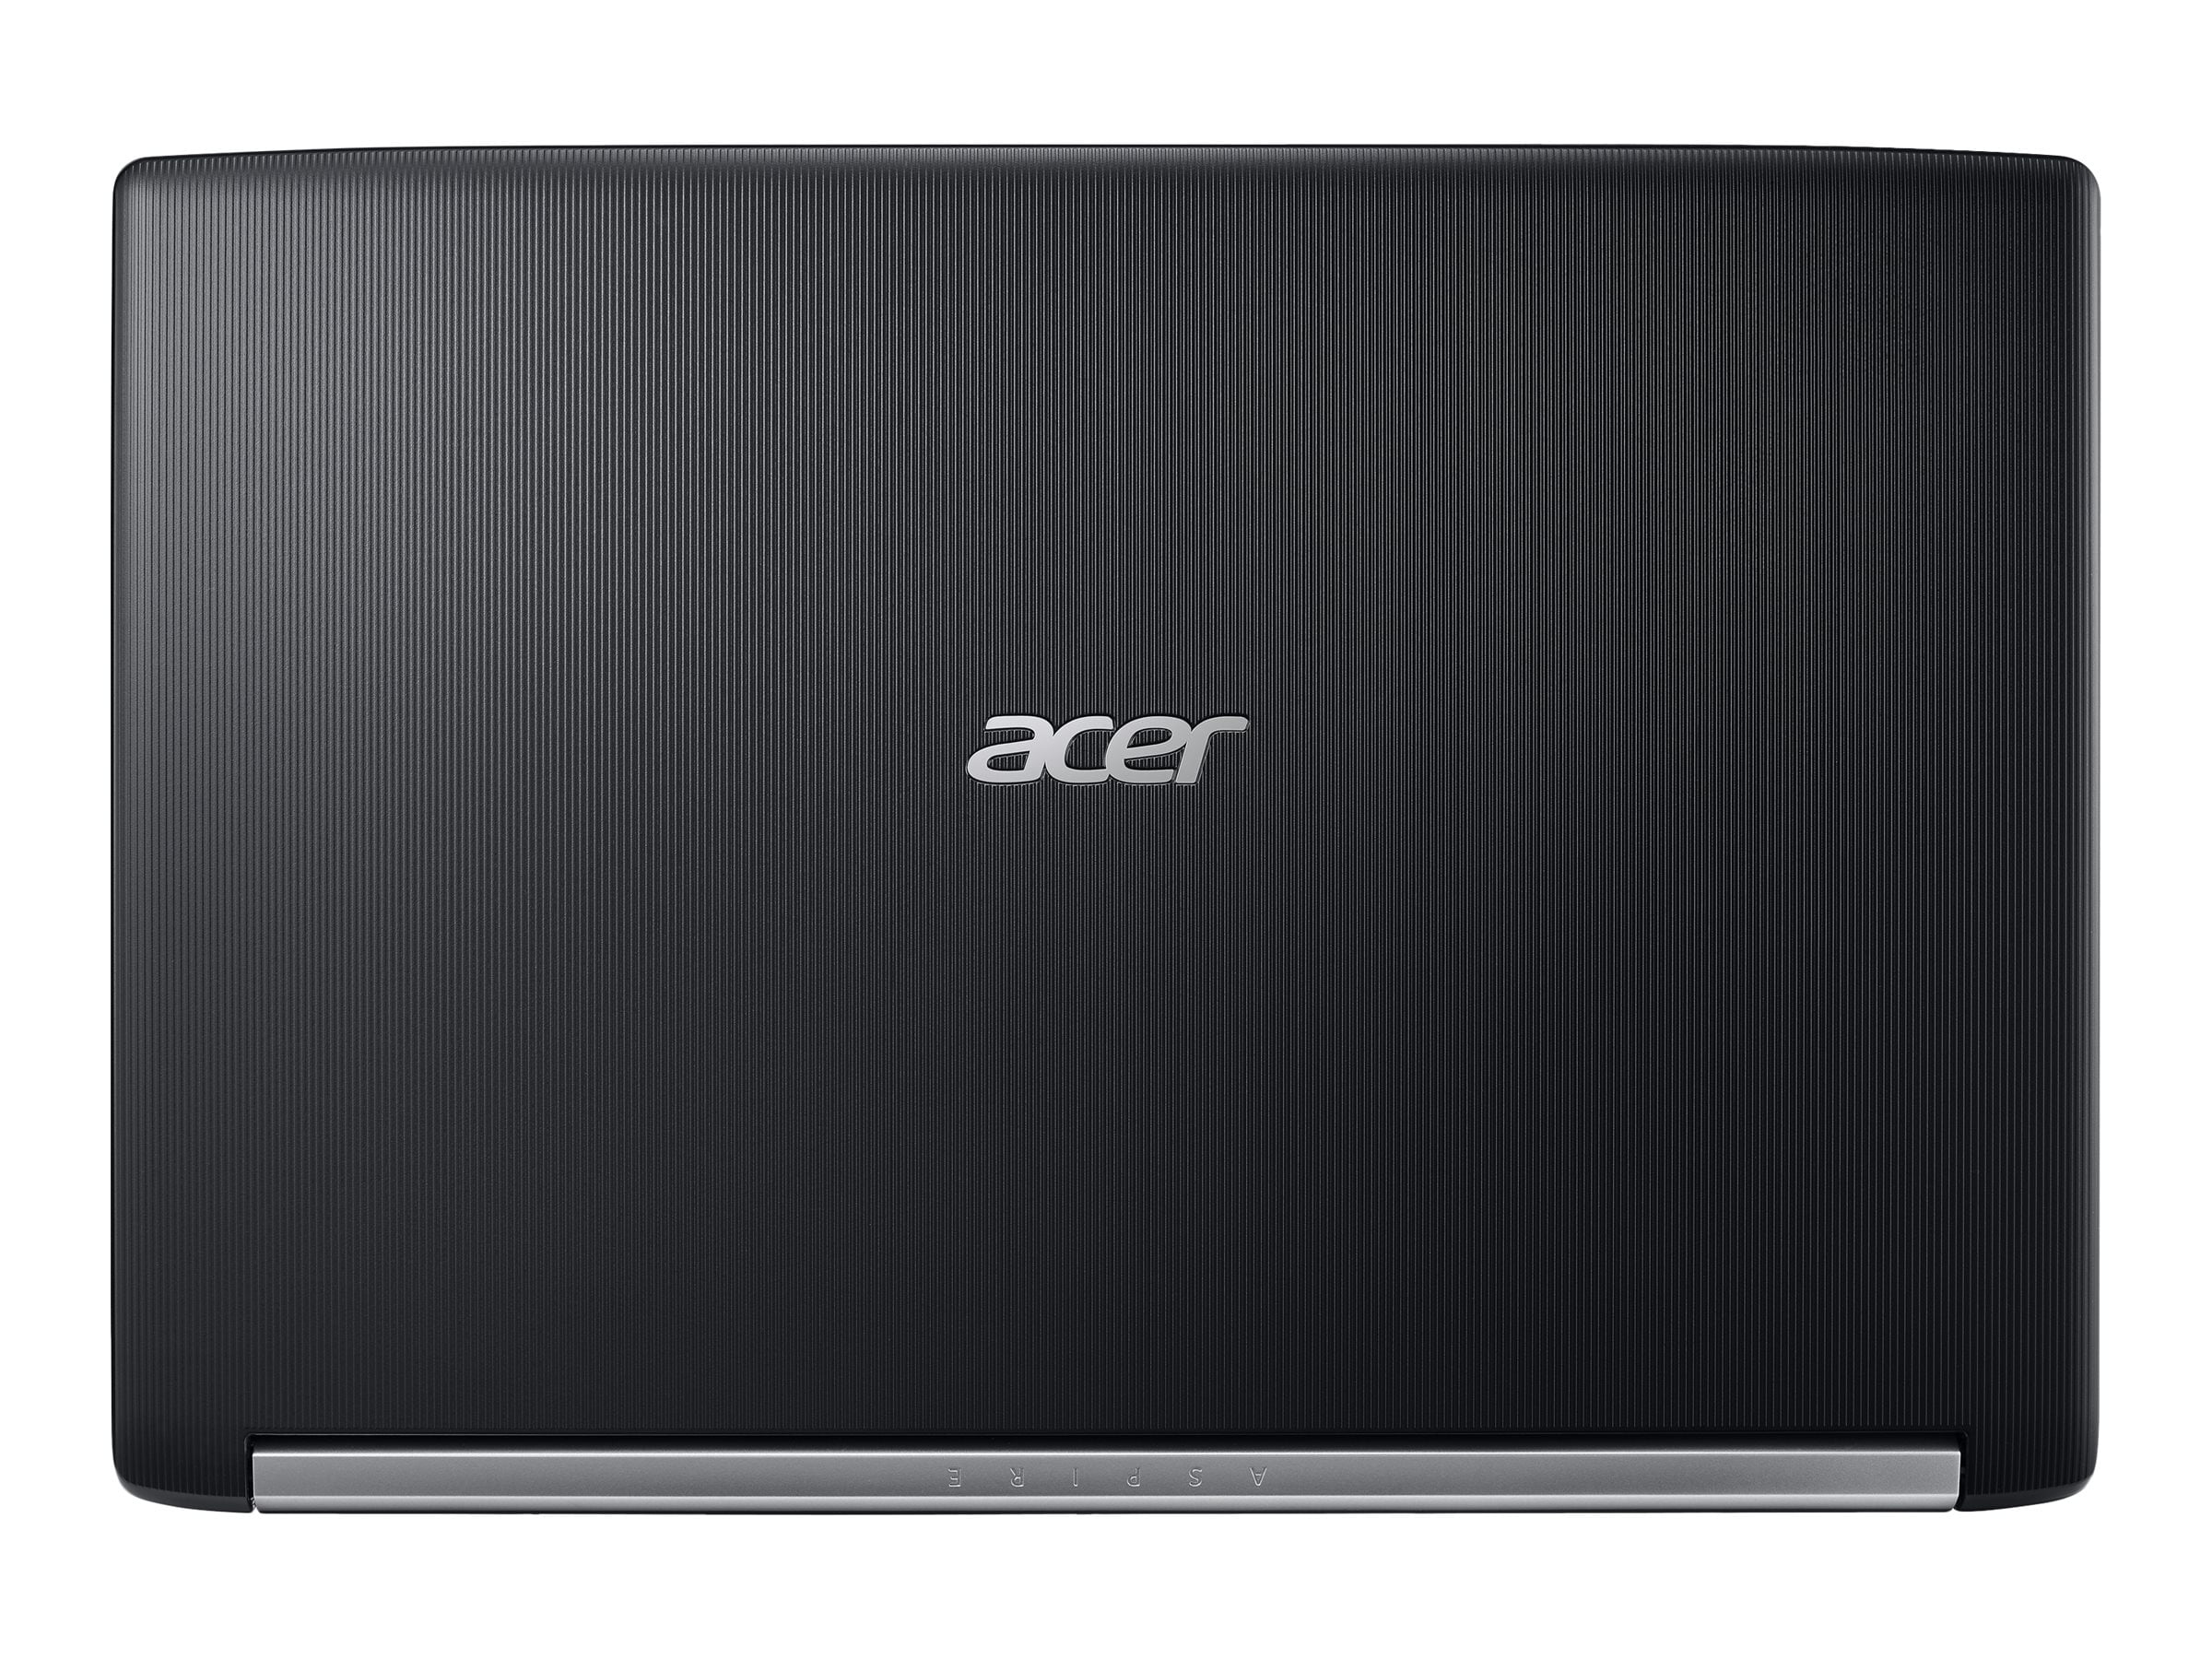 Acer a515-51g. Acer Aspire 5 a517. Acer Aspire 5 a515. Крышка матрицы для ноутбука Acer Aspire a515-51, матовый черный.